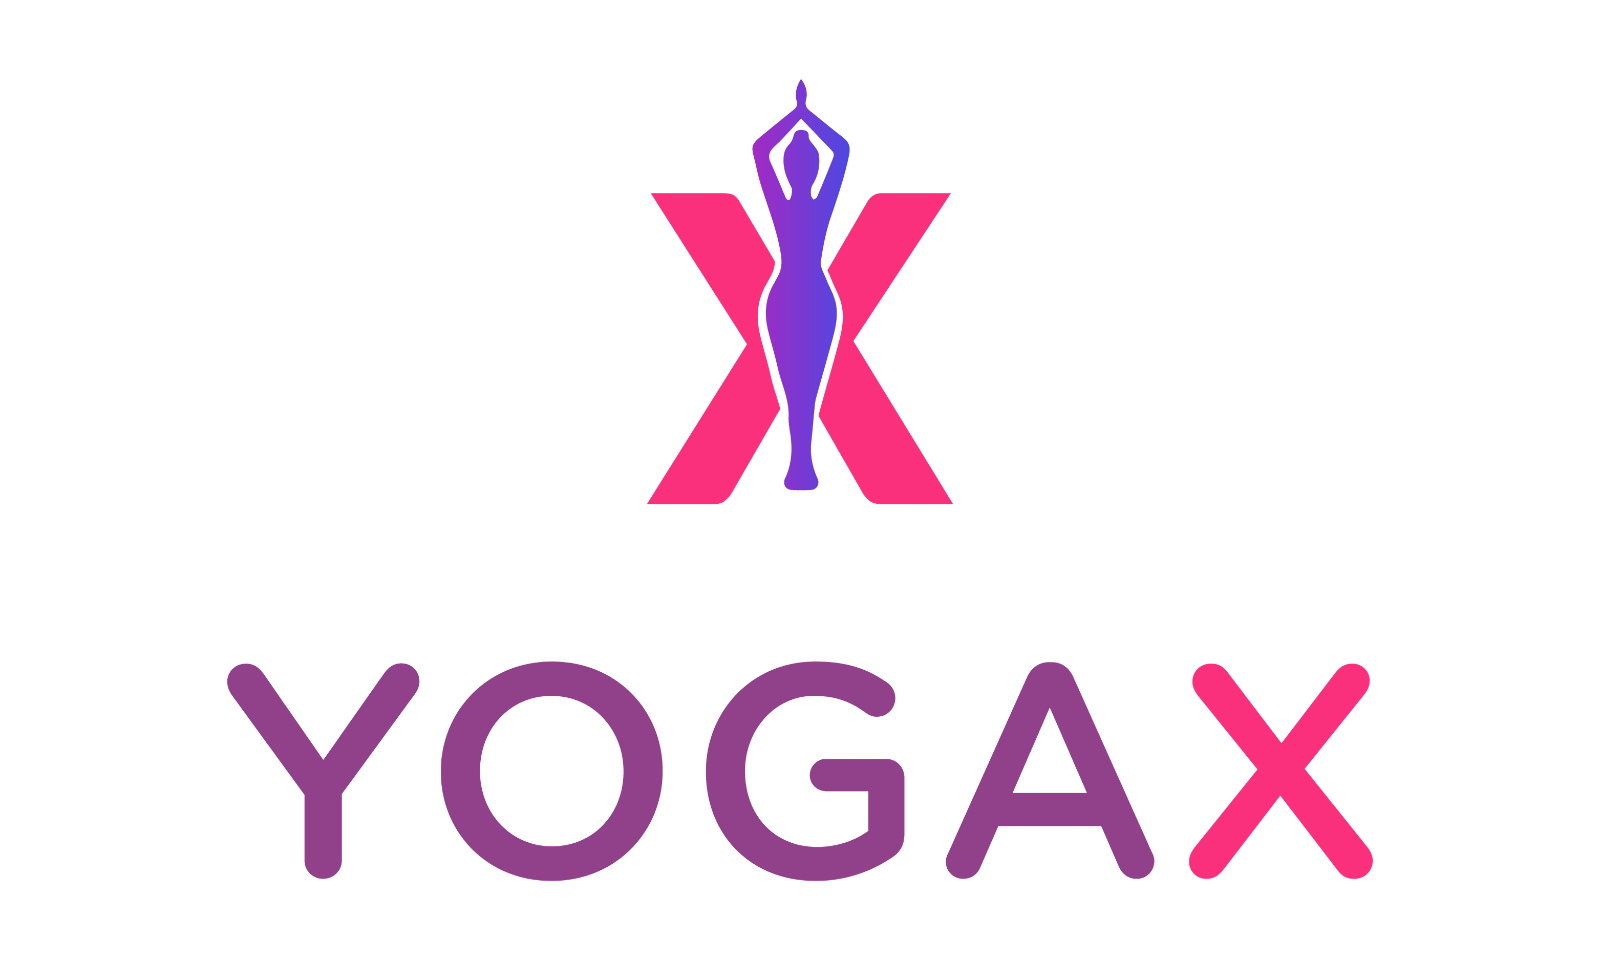 YogaX.com - Creative brandable domain for sale